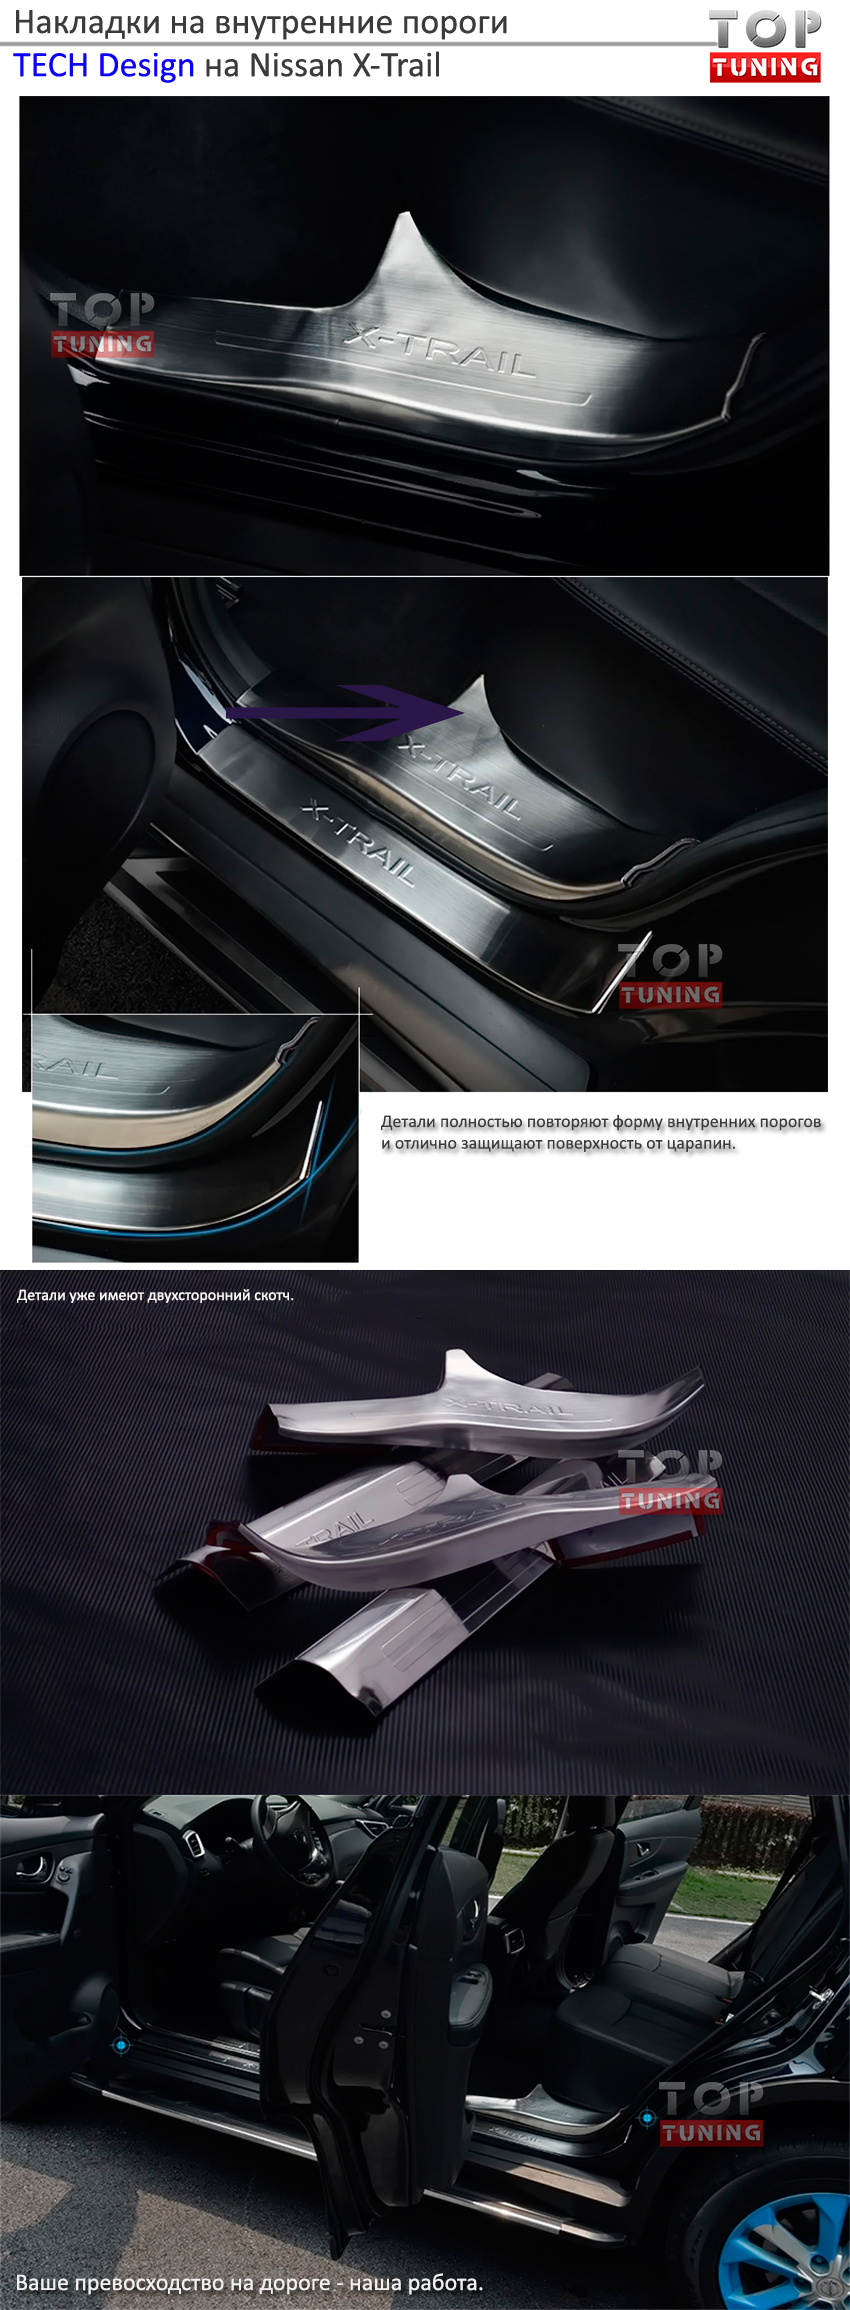 Накладки на внутренние пороги TECH Design на Nissan X-Trail